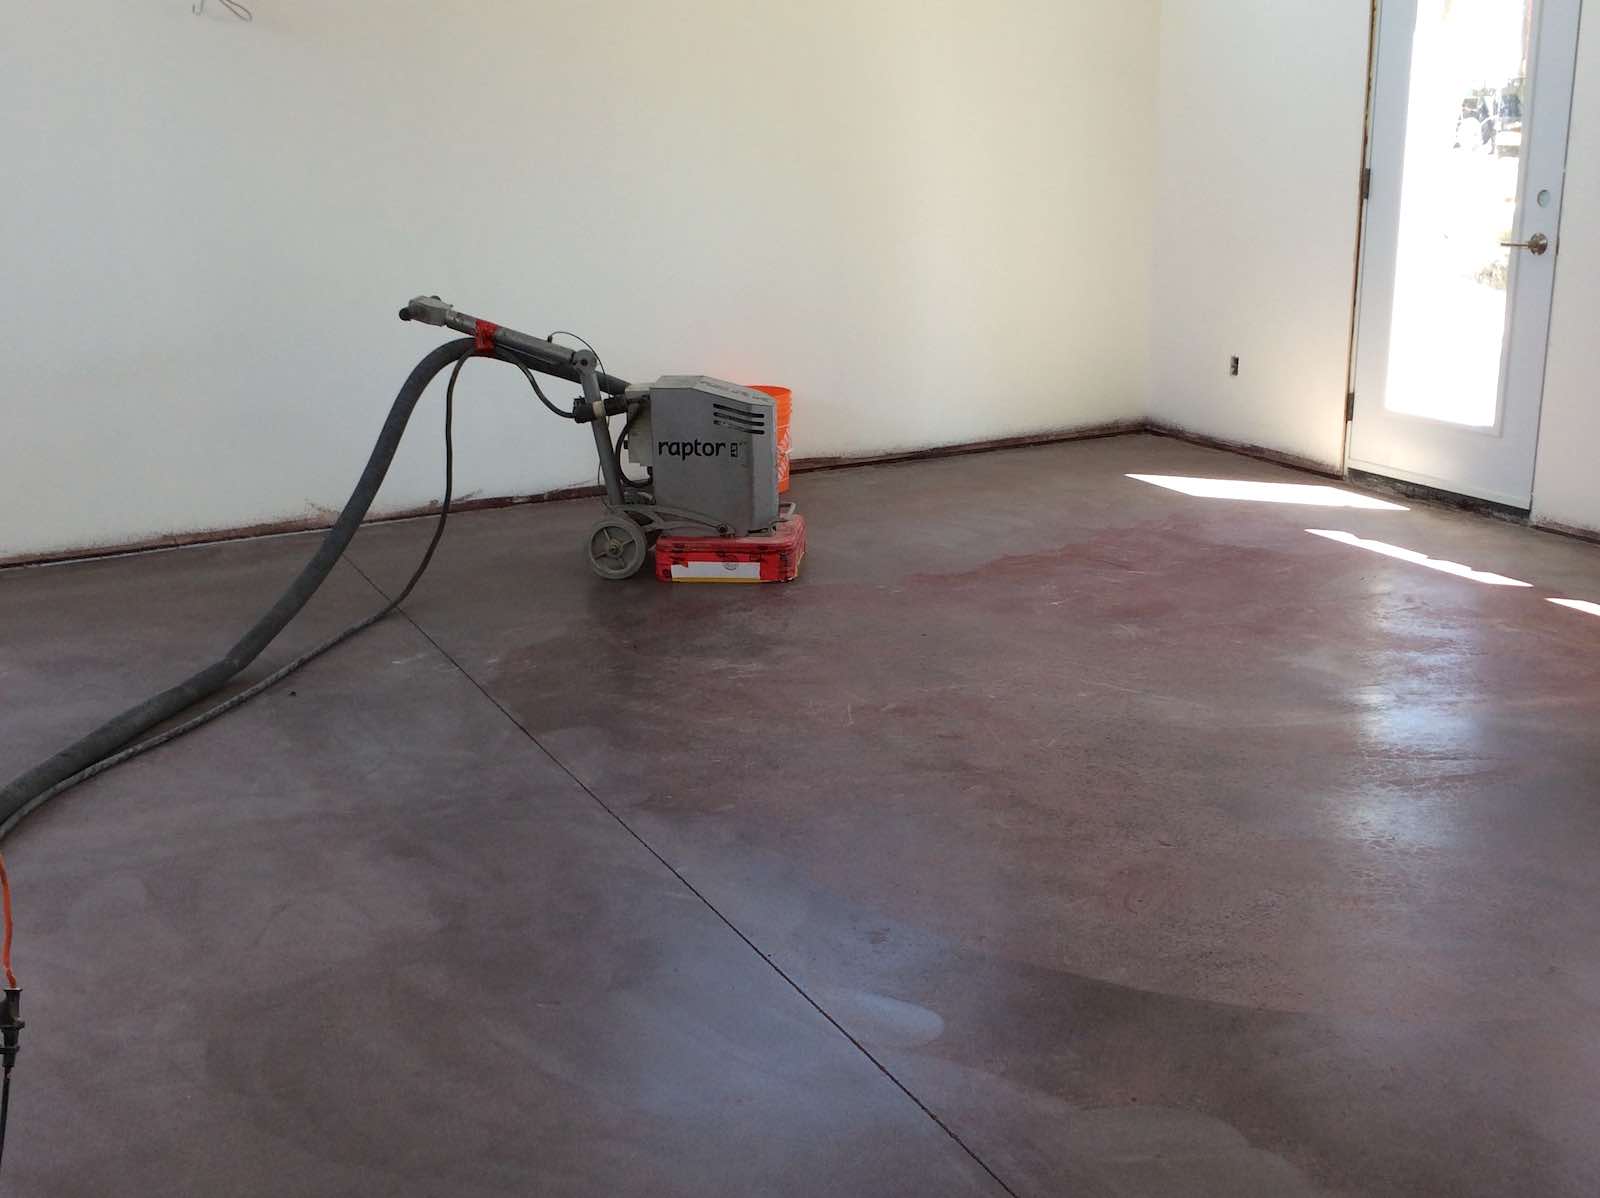 Polishing the concrete floor